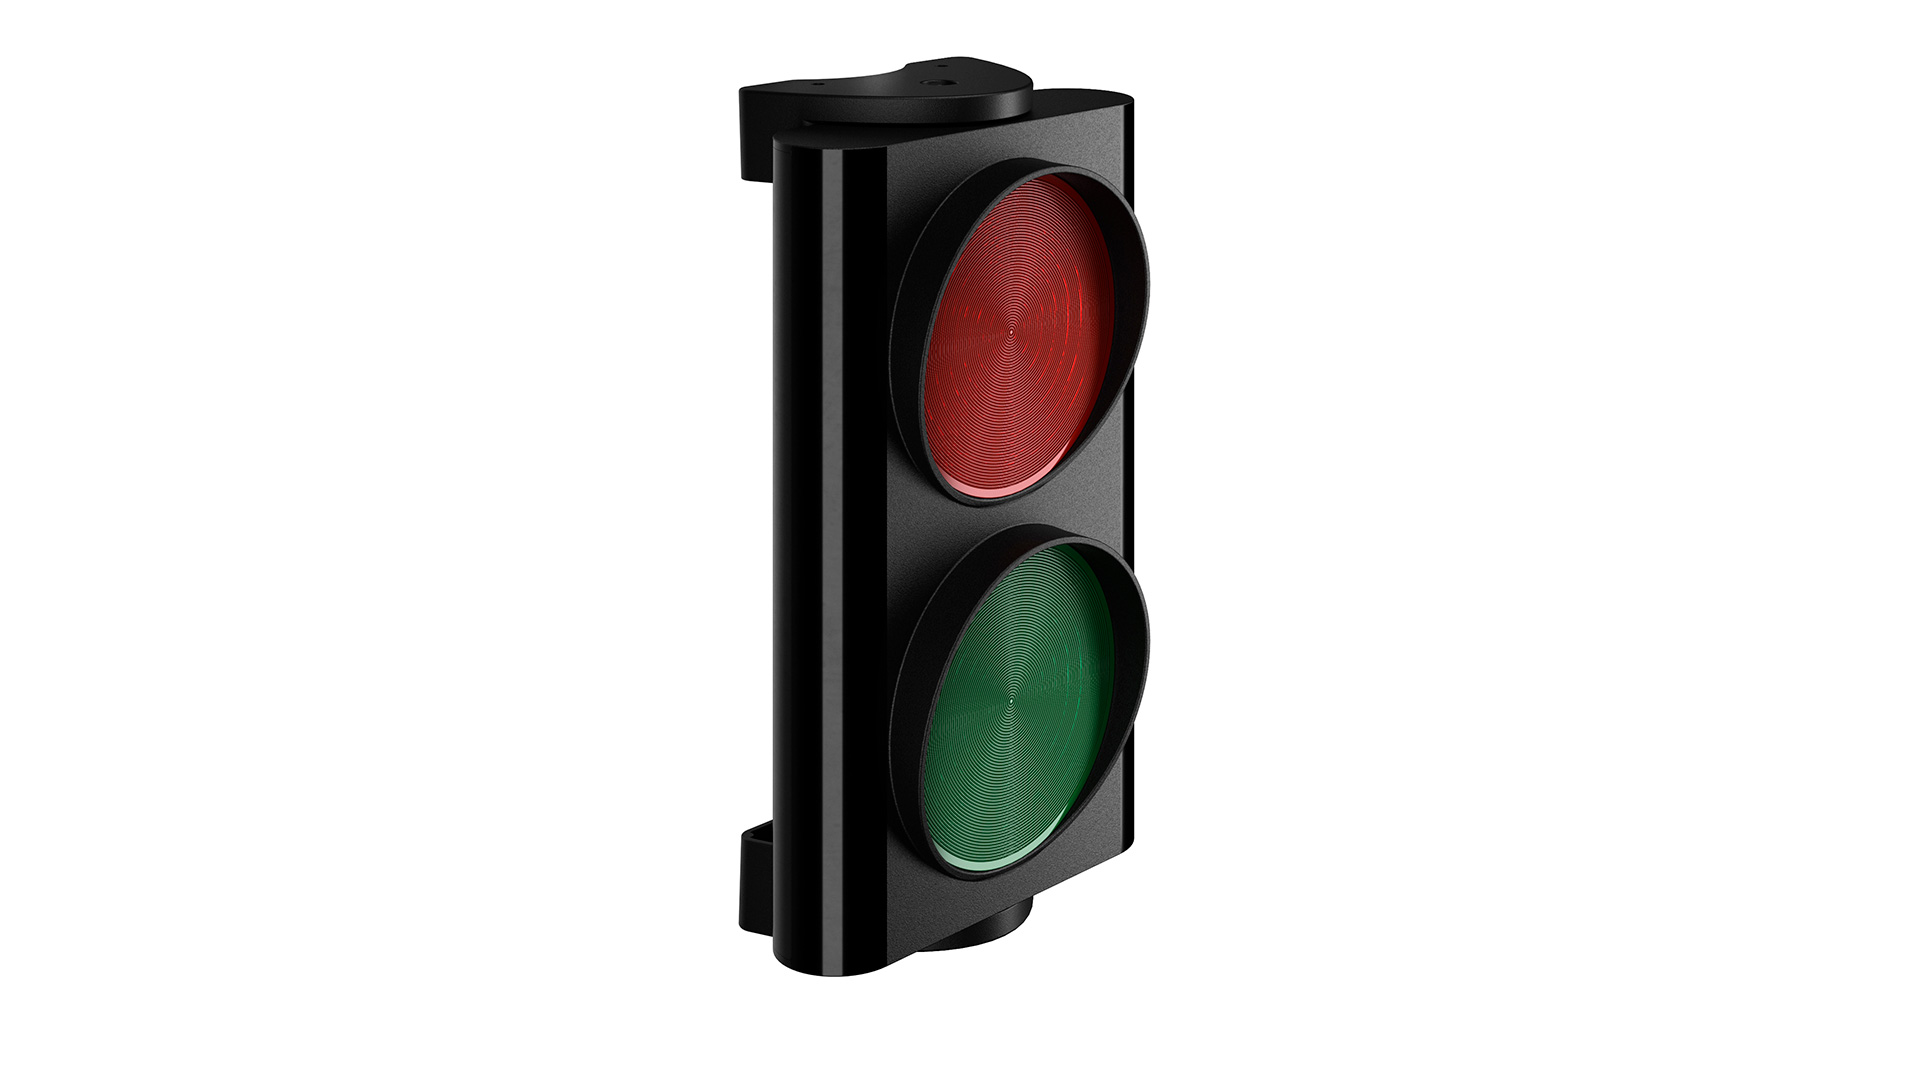 ERA80 semaforo luce rossa e verde verticale